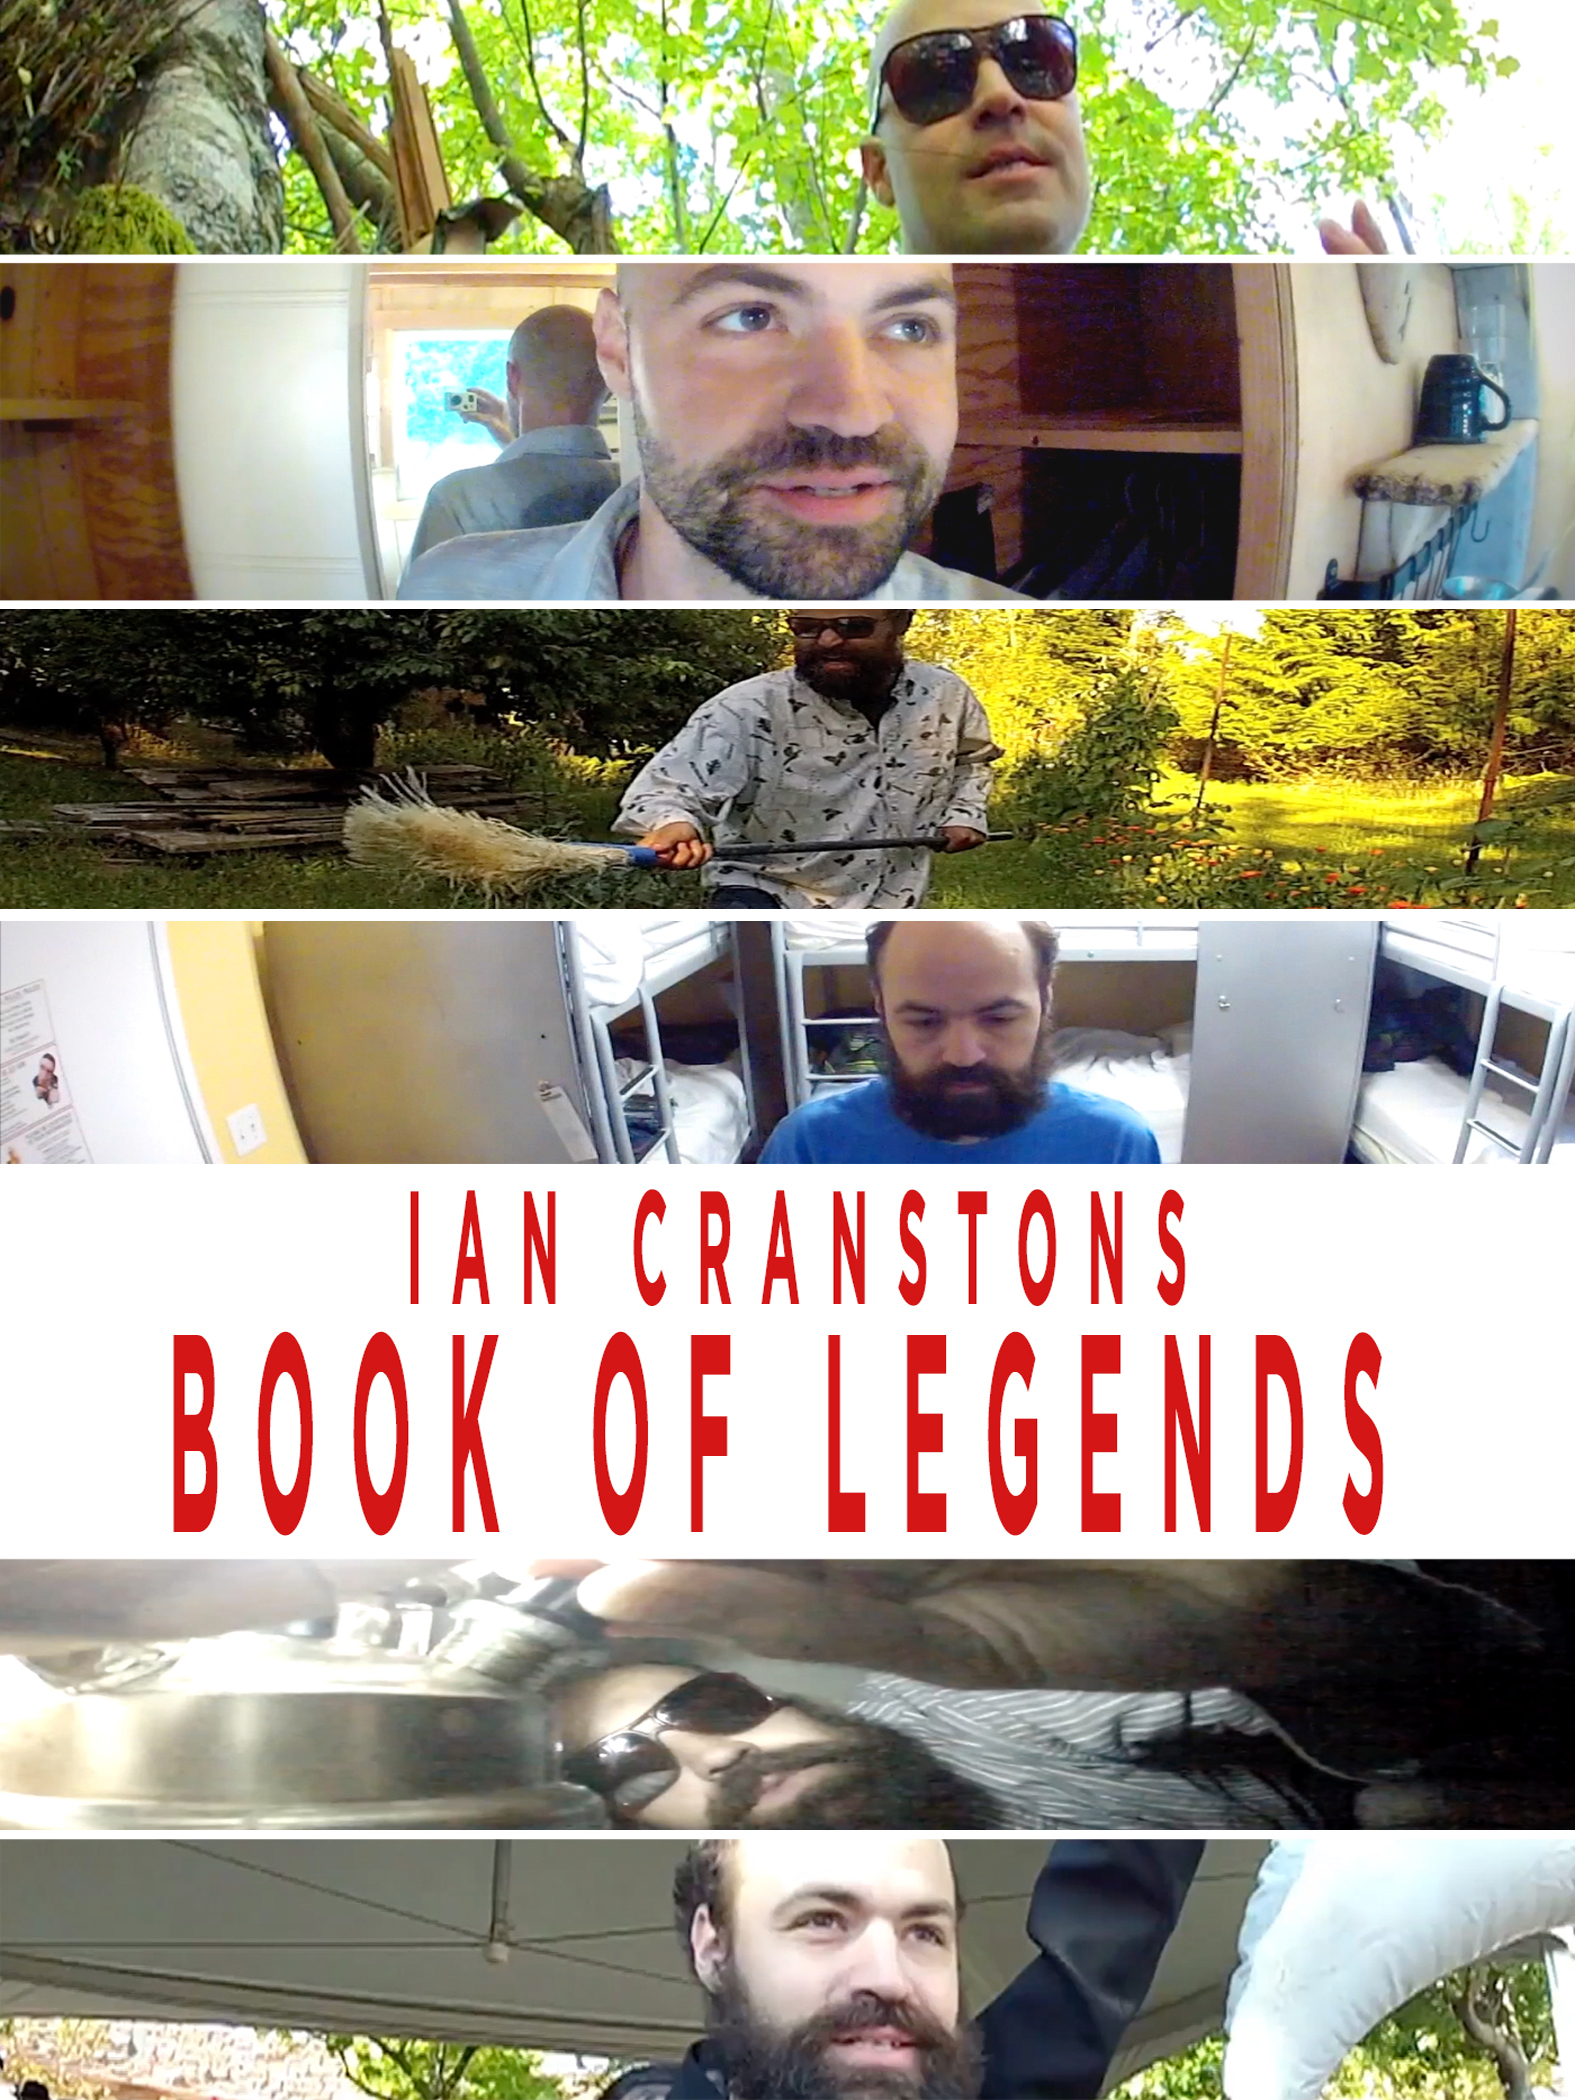 Ian Cranstons Book of Legends